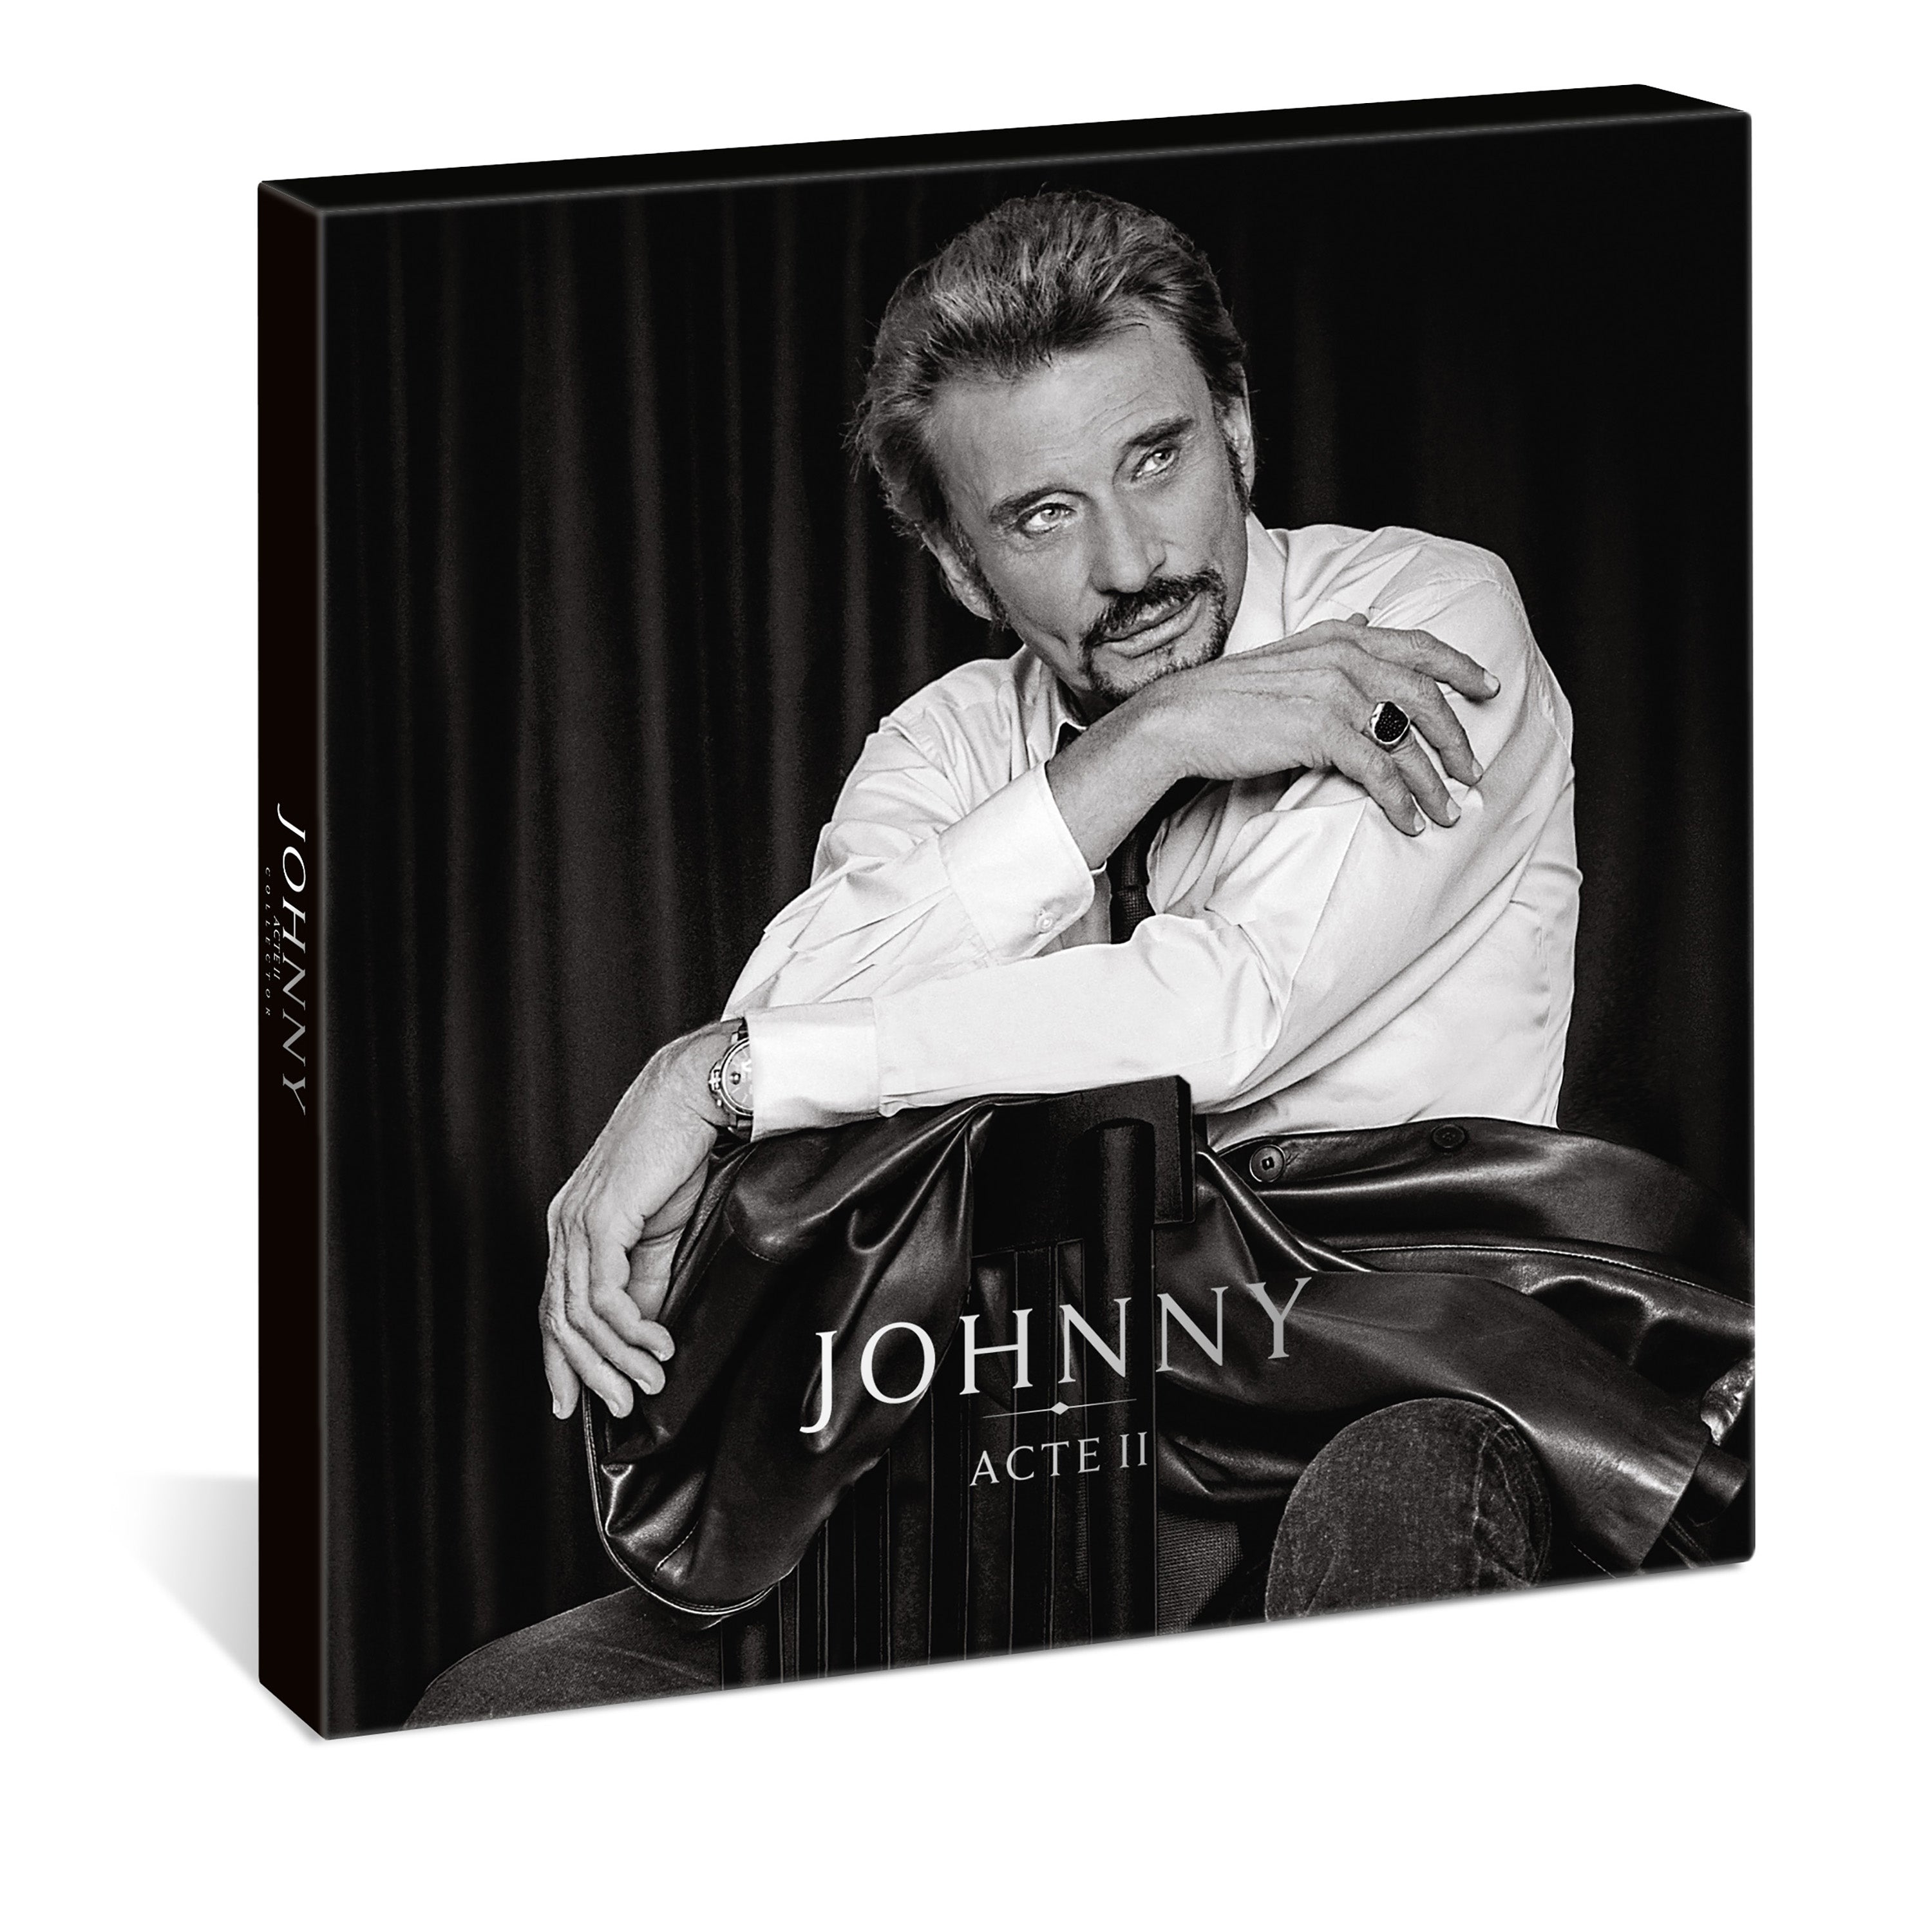 JOHNNY ACTE II - Coffret Collector Double vinyle+CD+25 cm